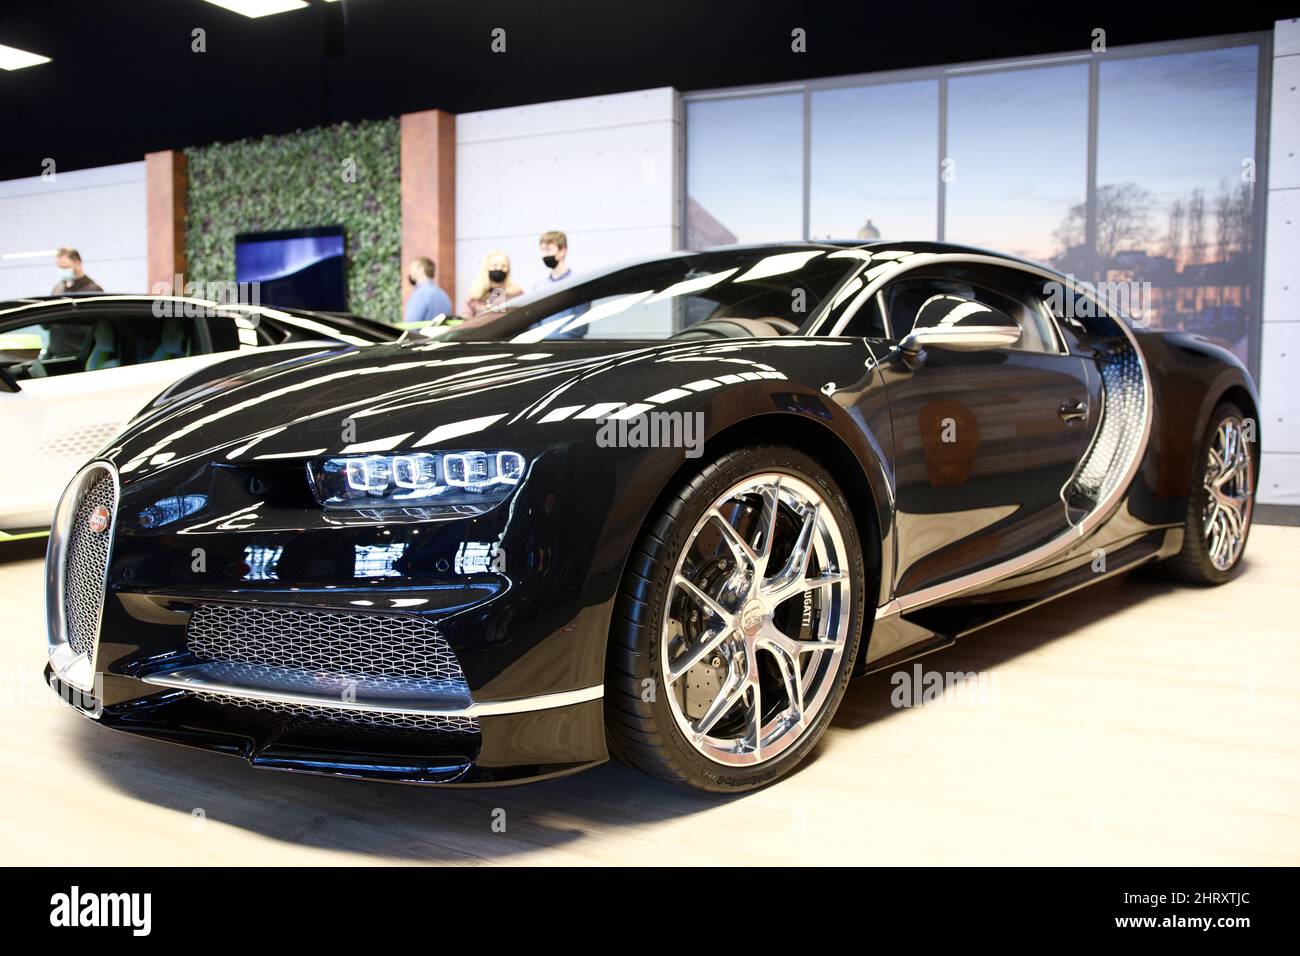 Bugatti drive stock photography and images - Alamy